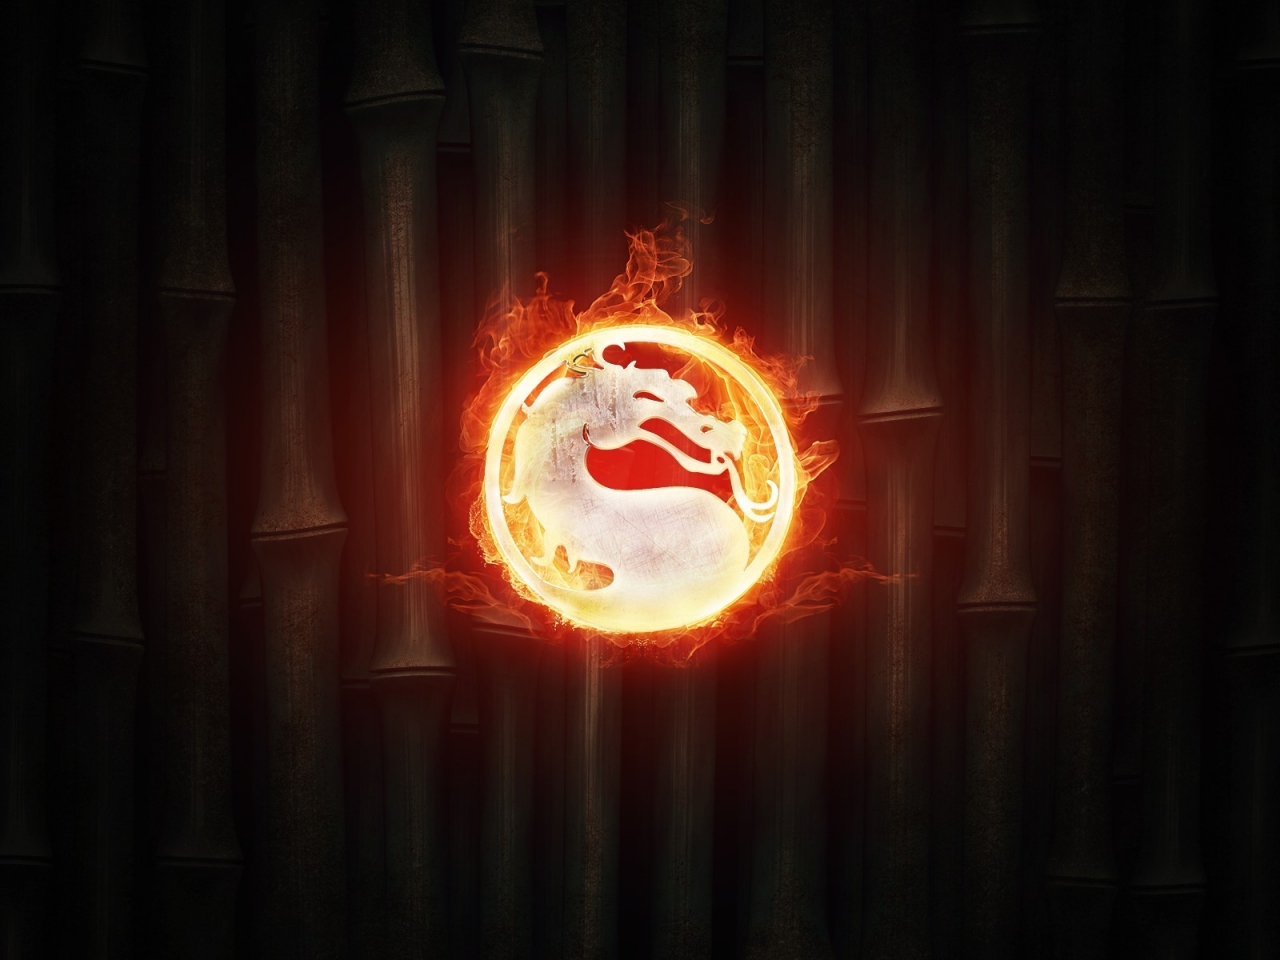 Mortal Kombat Fire for 1280 x 960 resolution